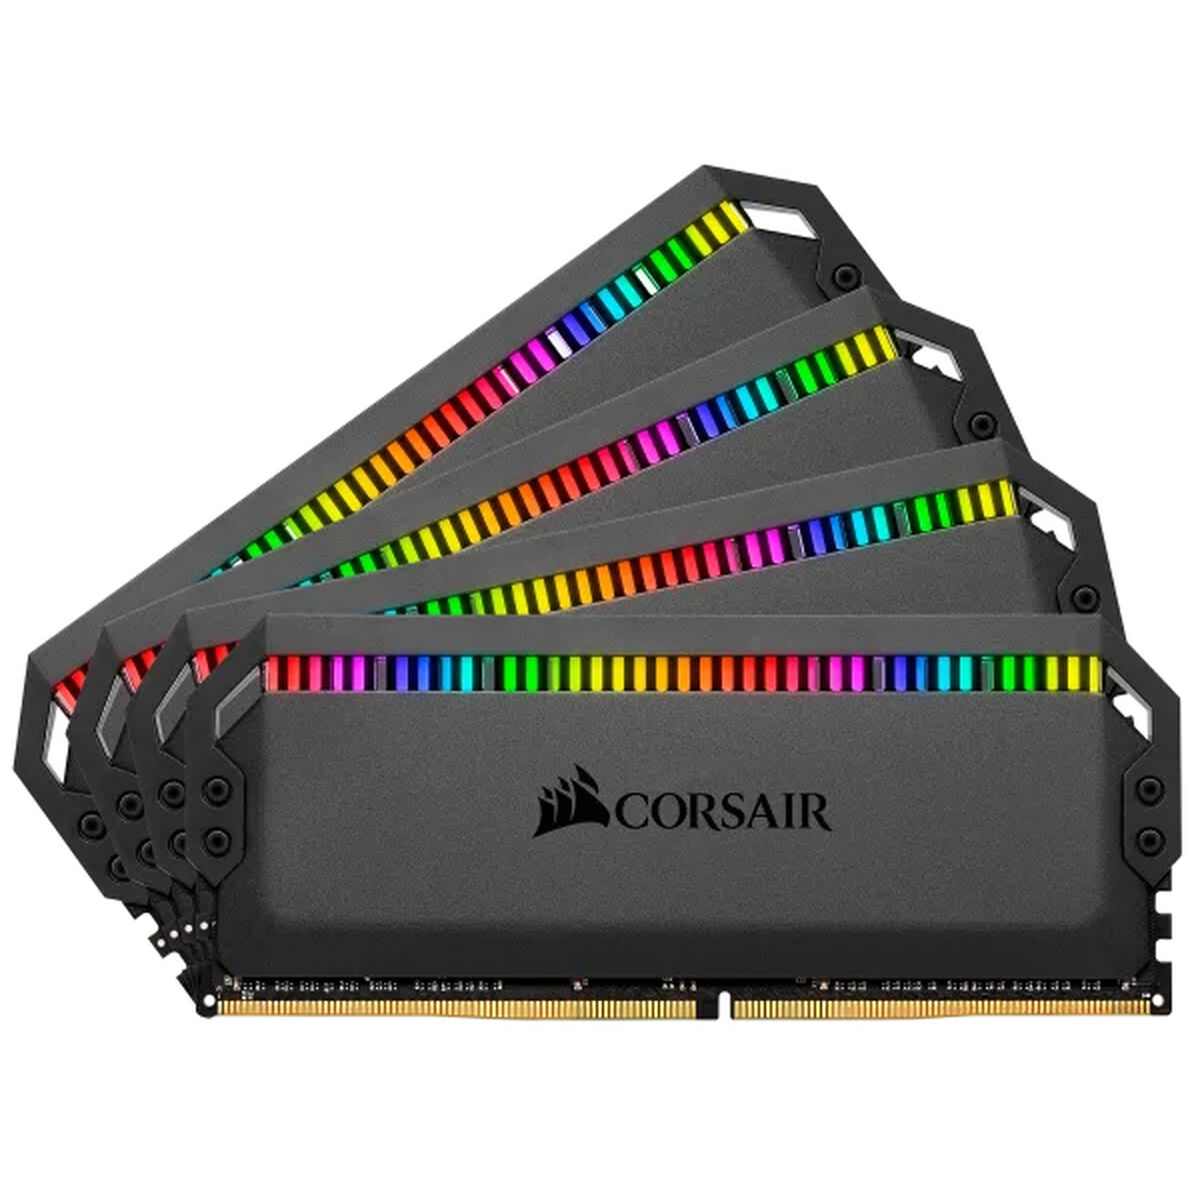 RAM Memory Corsair Platinum RGB 32 GB